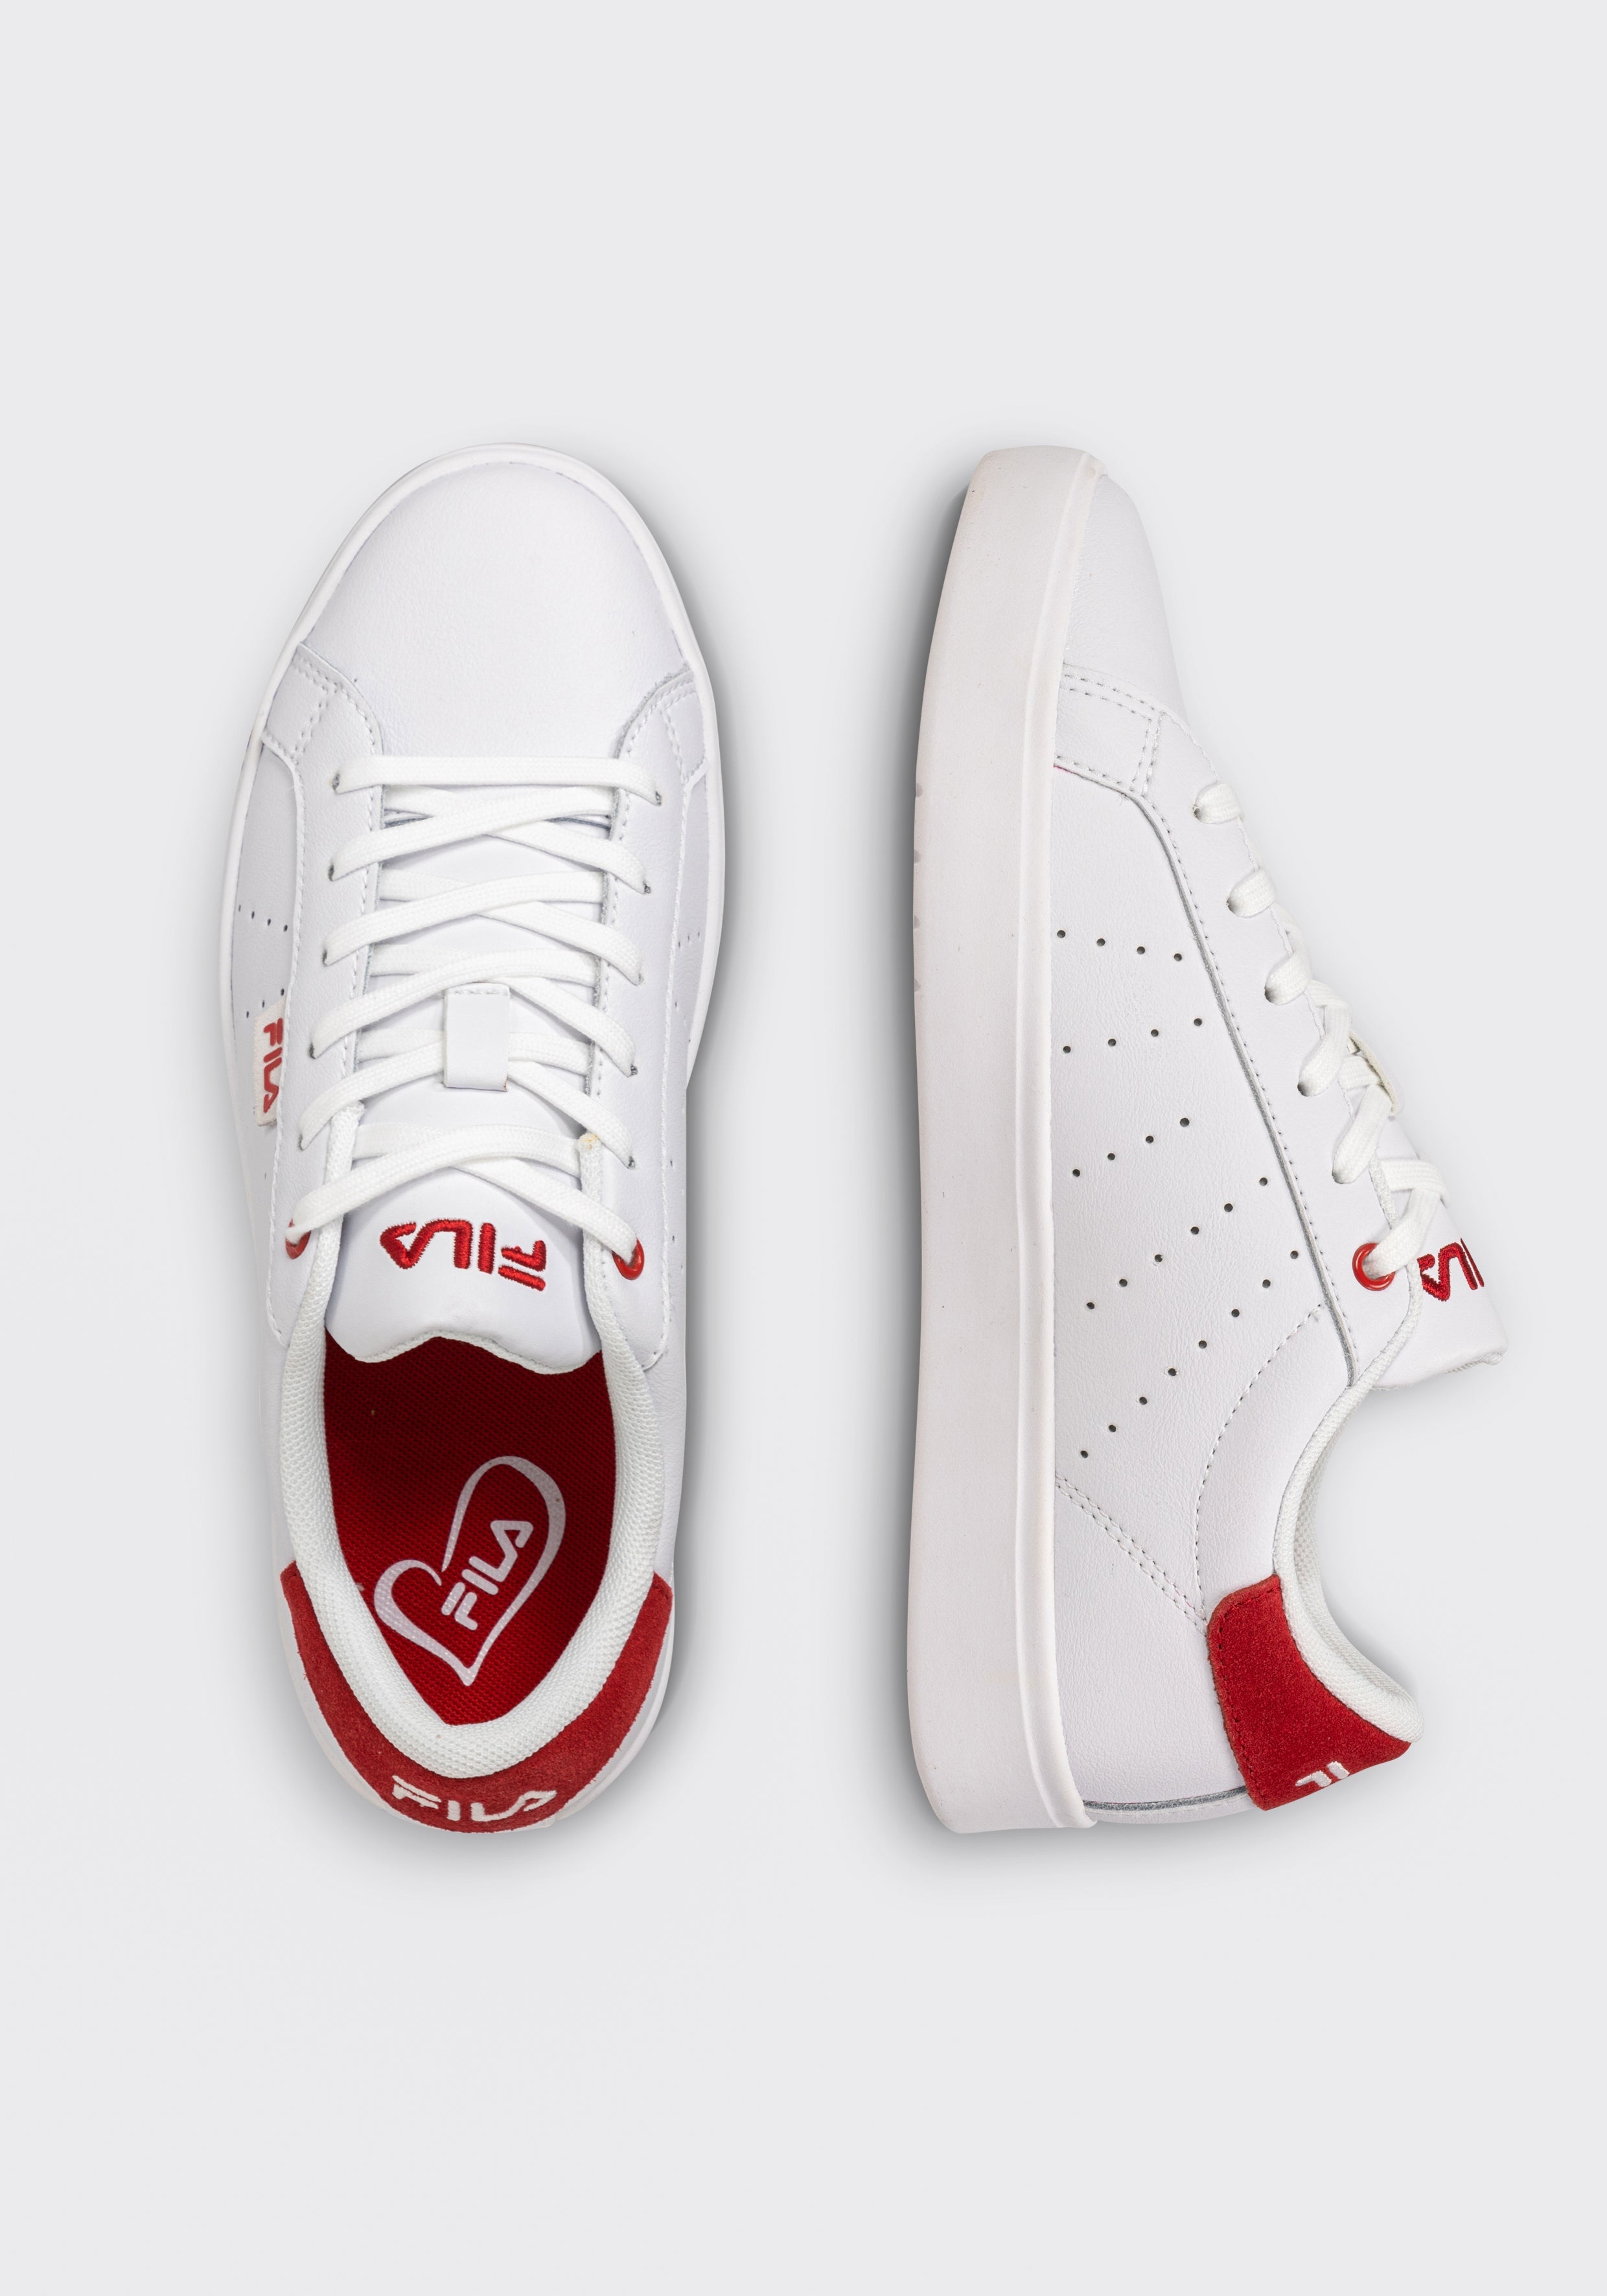 Lusso V Wmn in White-Fila Red Sneakers Fila   